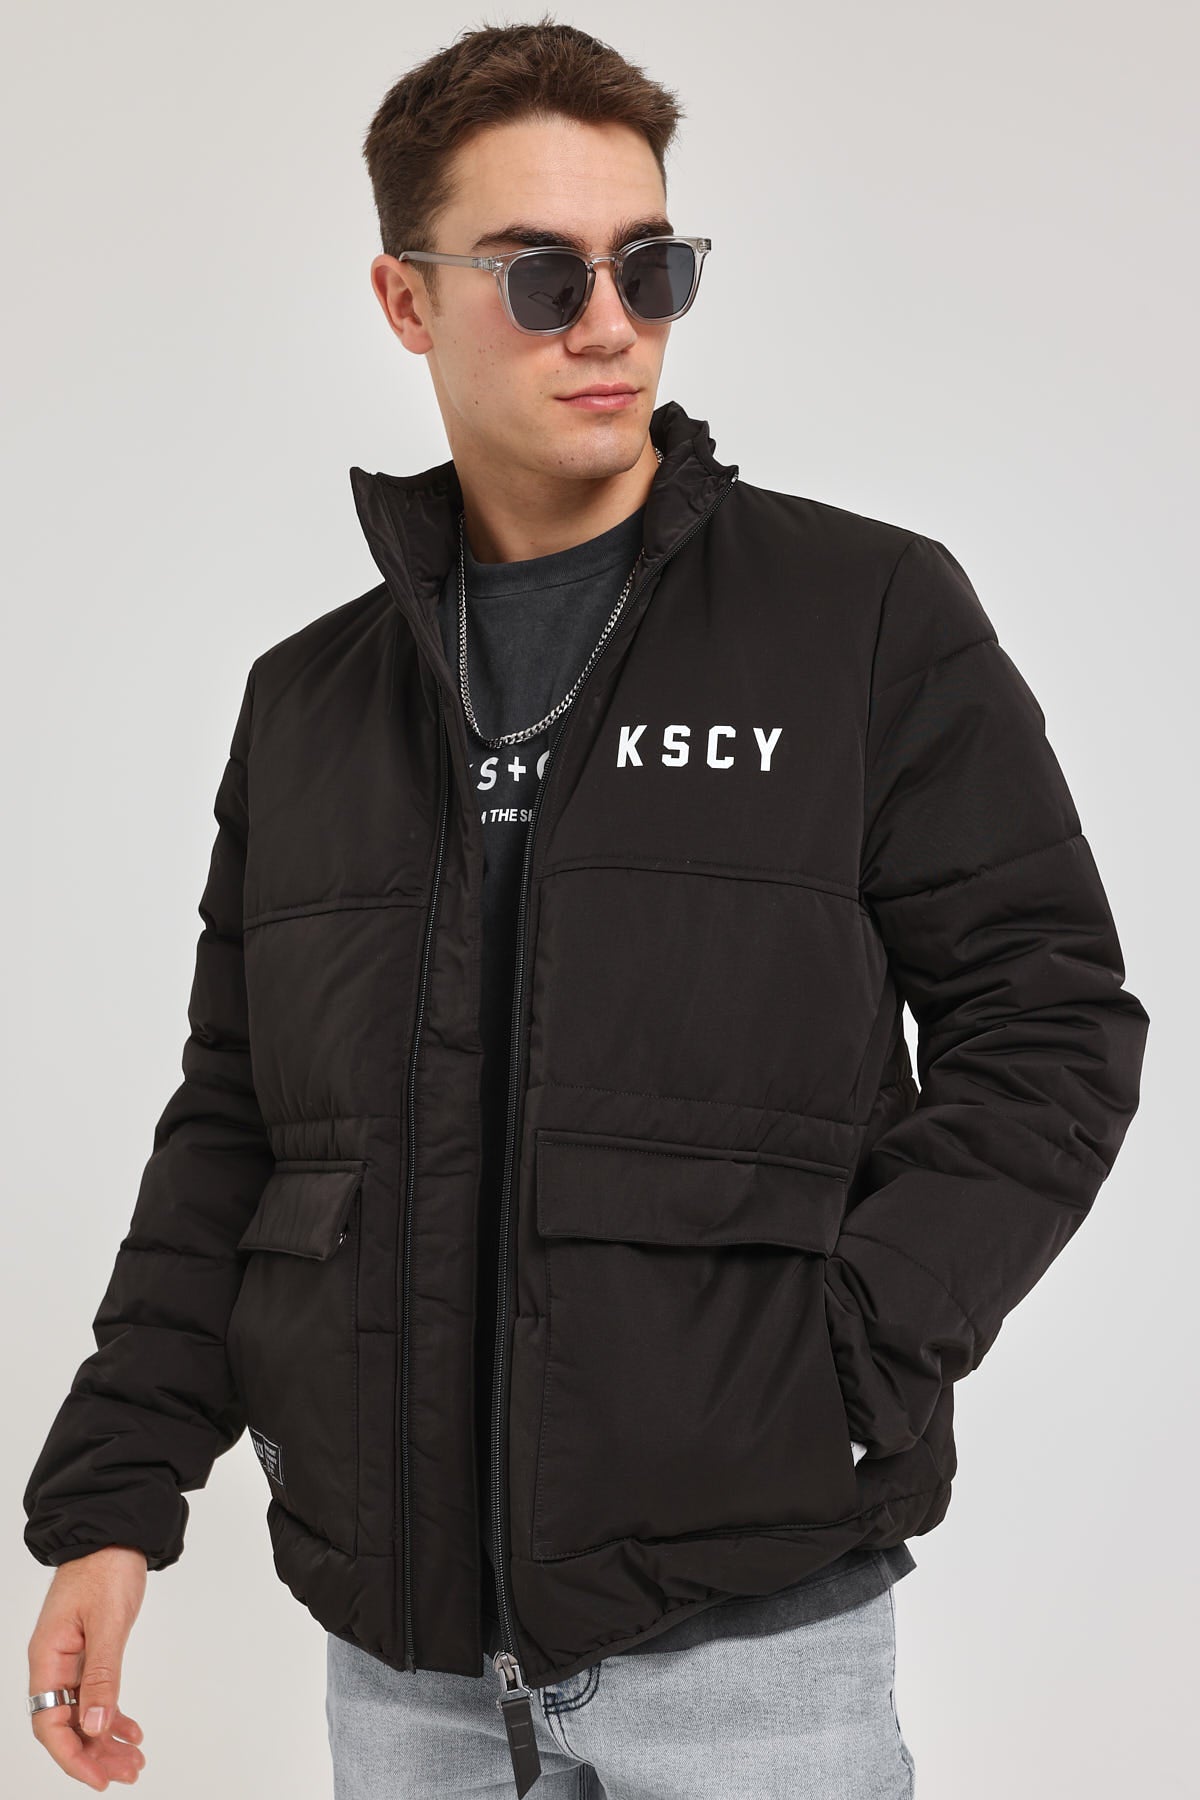 Kiss Chacey Eastlake Puffer Jacket Black